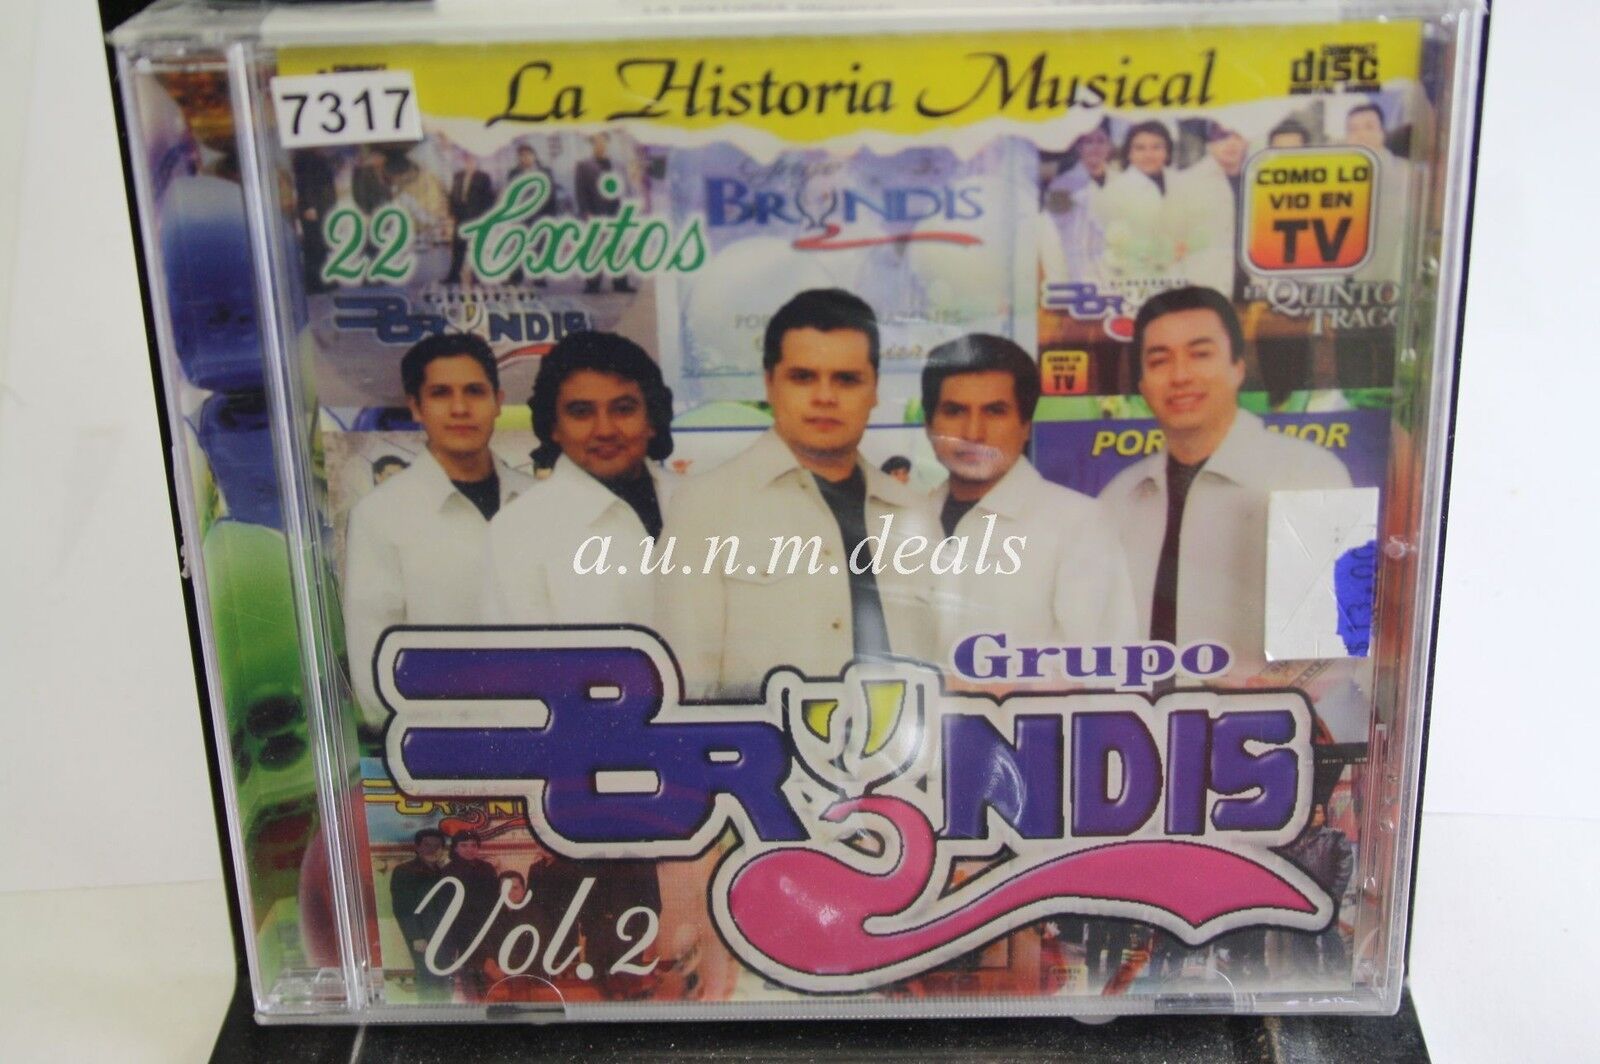 La Historia Musical 22 Exitos Vol 2 Grupo Brandis, Music CD (NEW)